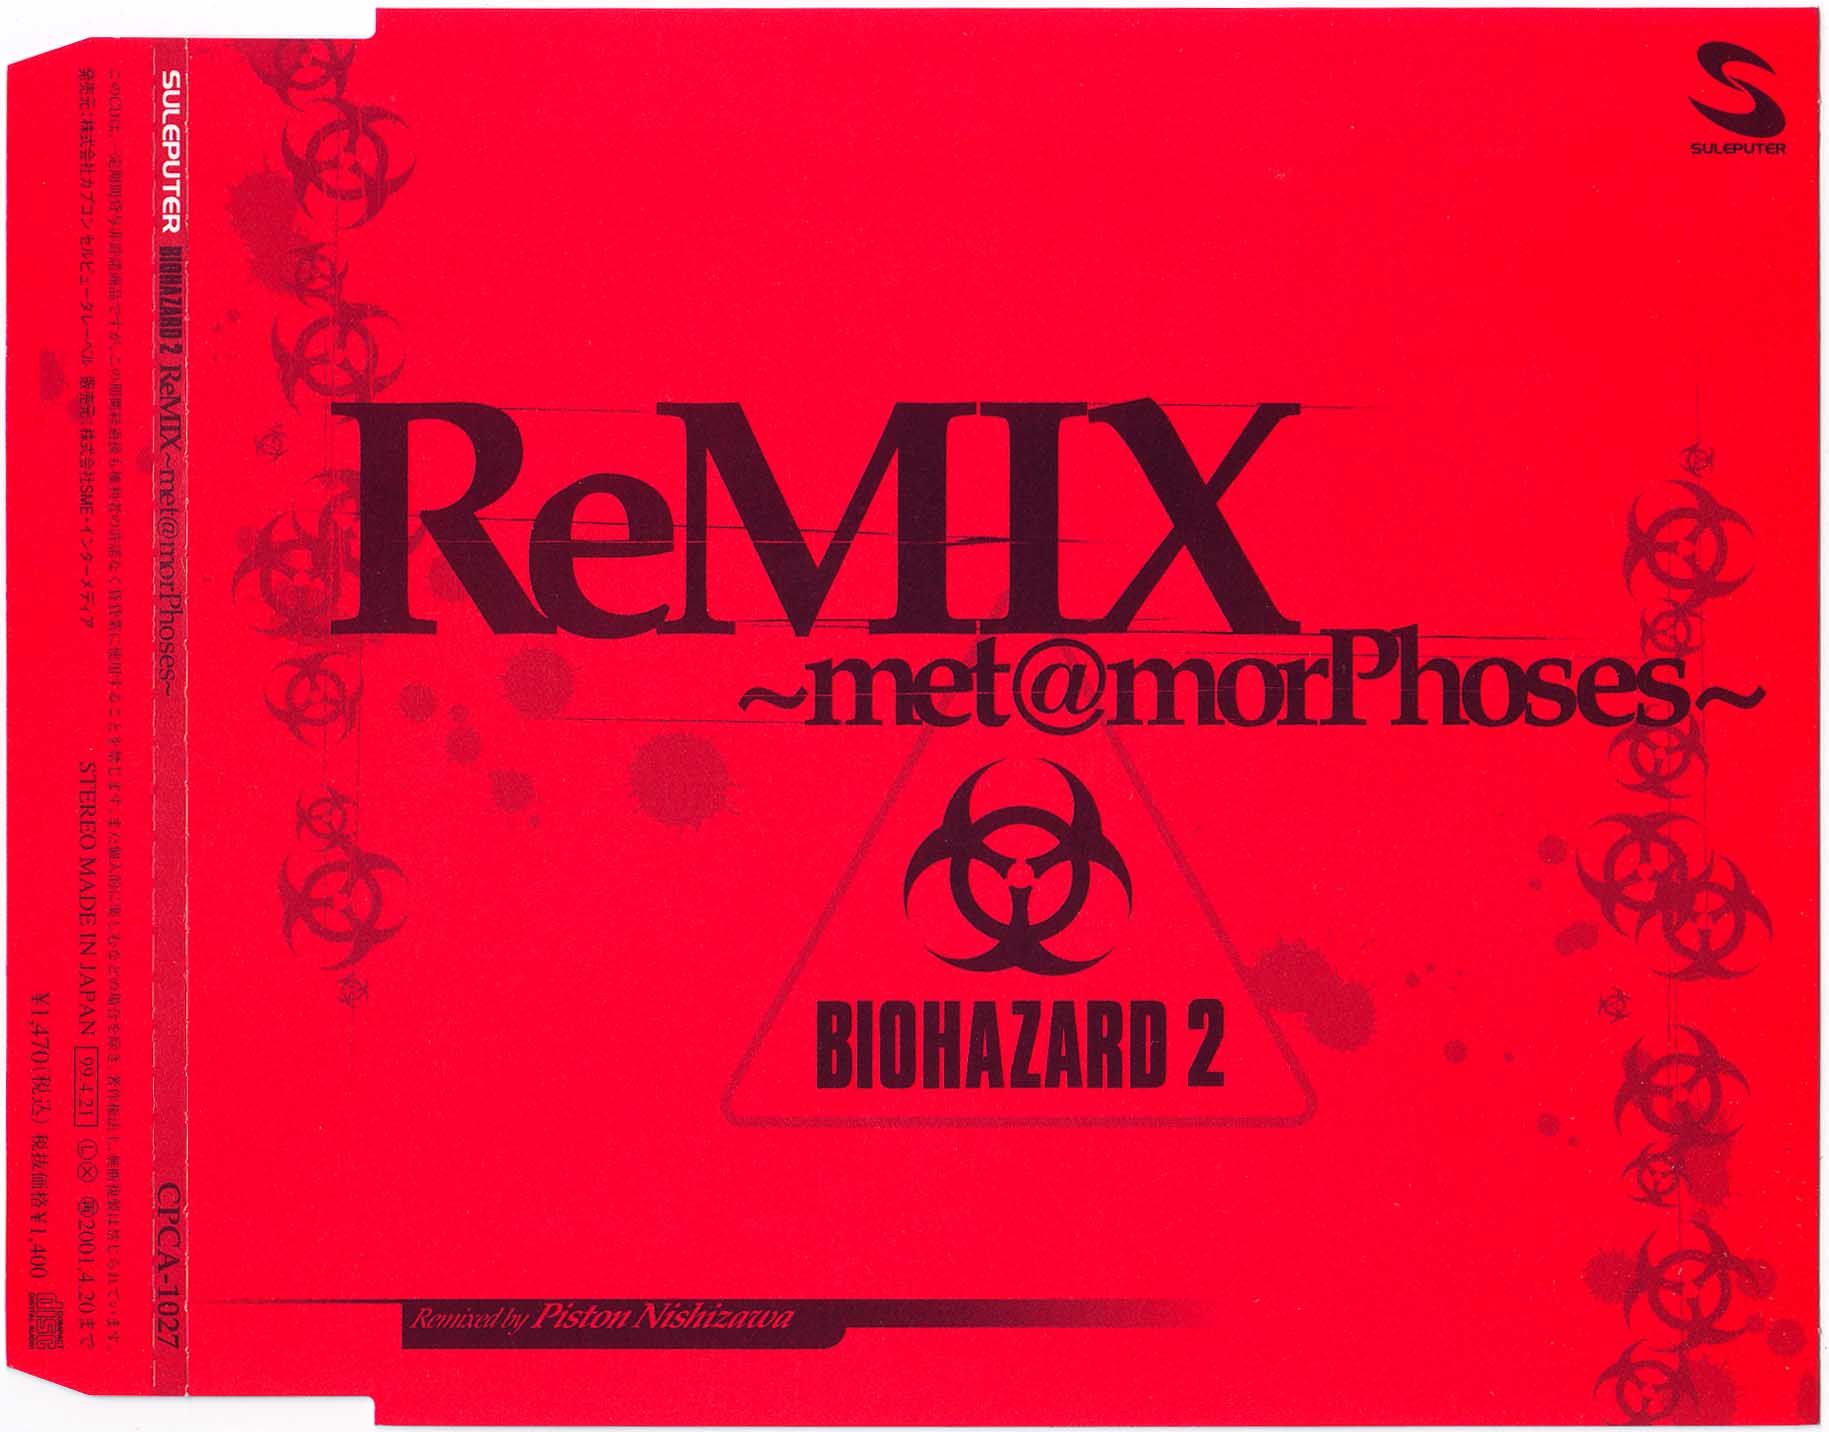 BIOHAZARD 2 ReMIX ~met@morPhoses~ | Resident Evil Wiki | Fandom